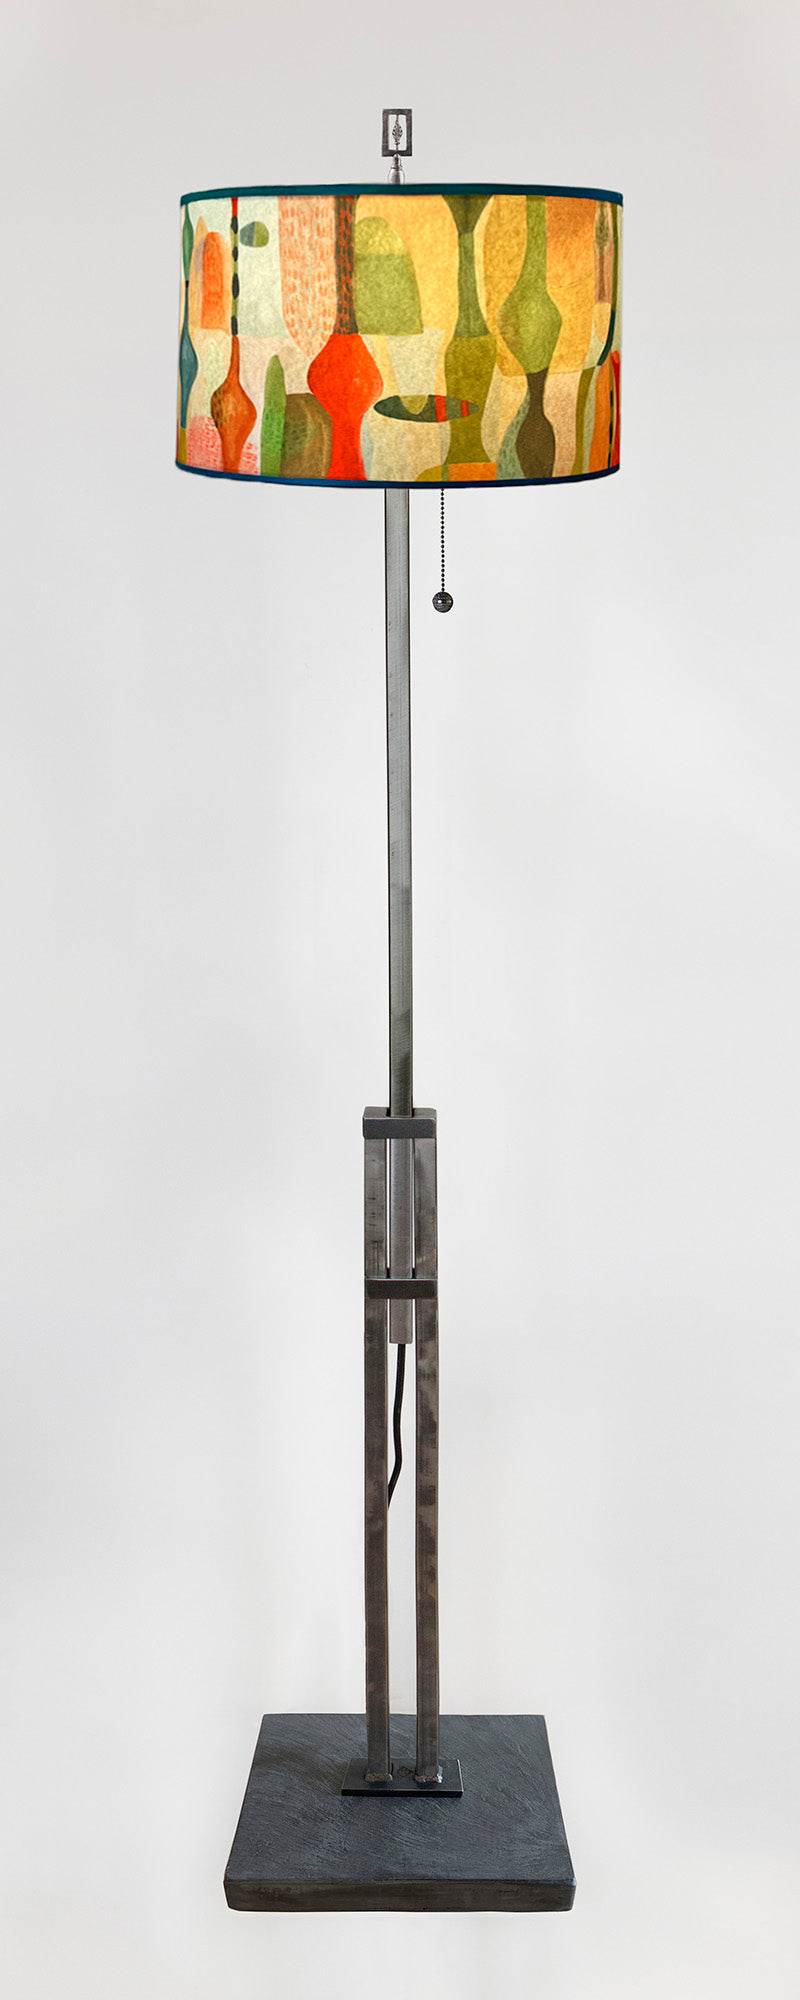 Janna Ugone & Co Floor Lamp Adjustable-Height Steel Floor Lamp with Large Drum Shade in Riviera in Poppy